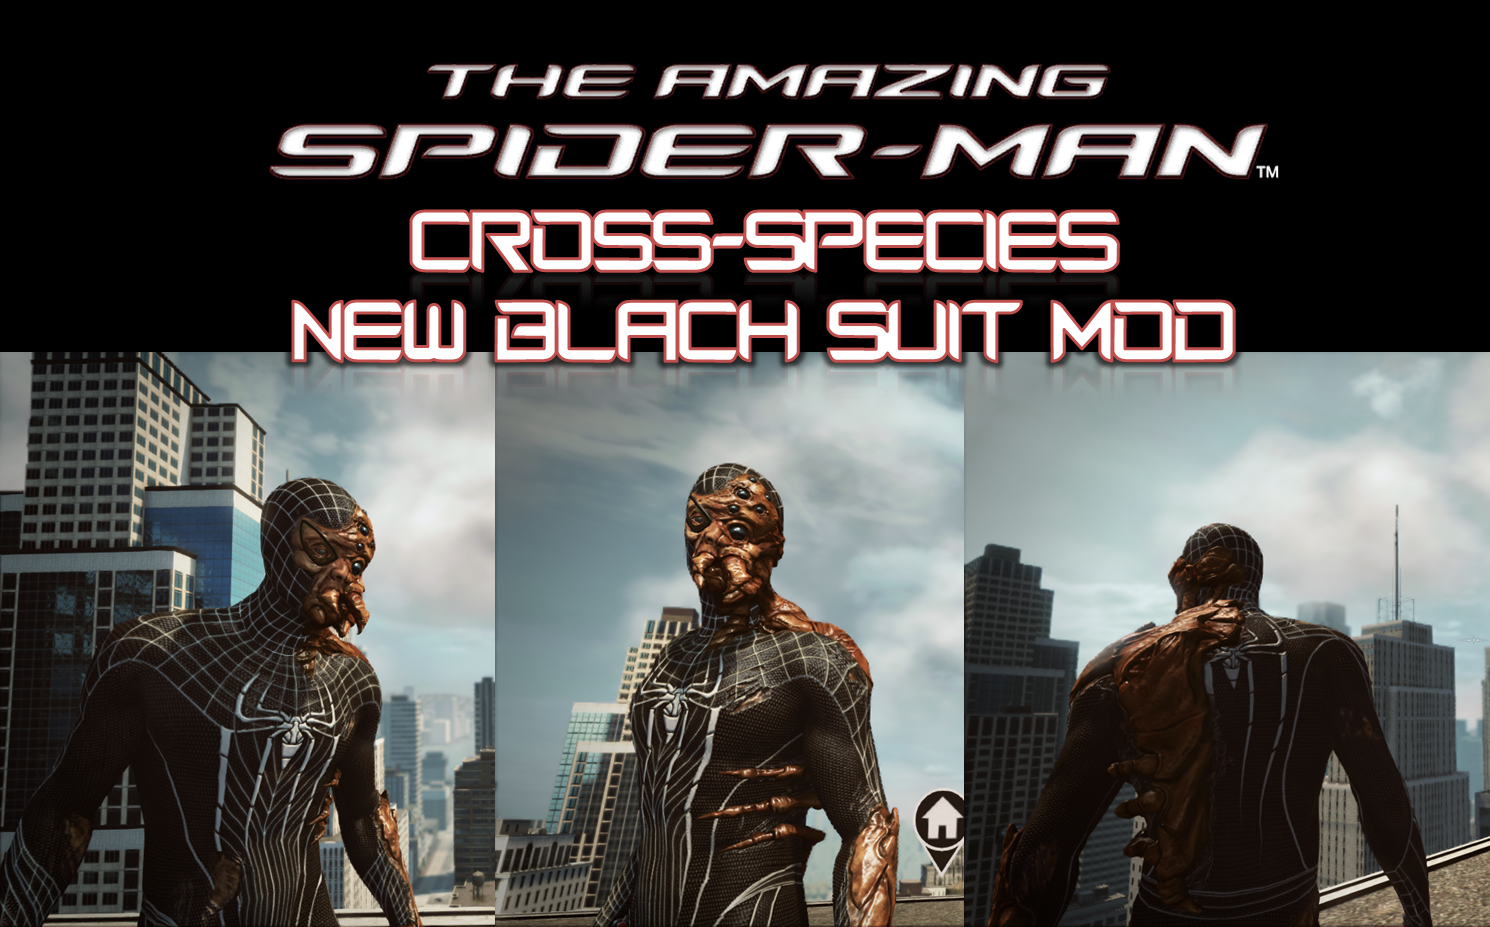 Cross-Species New Black Suit MOD by sanadsk5 on DeviantArt